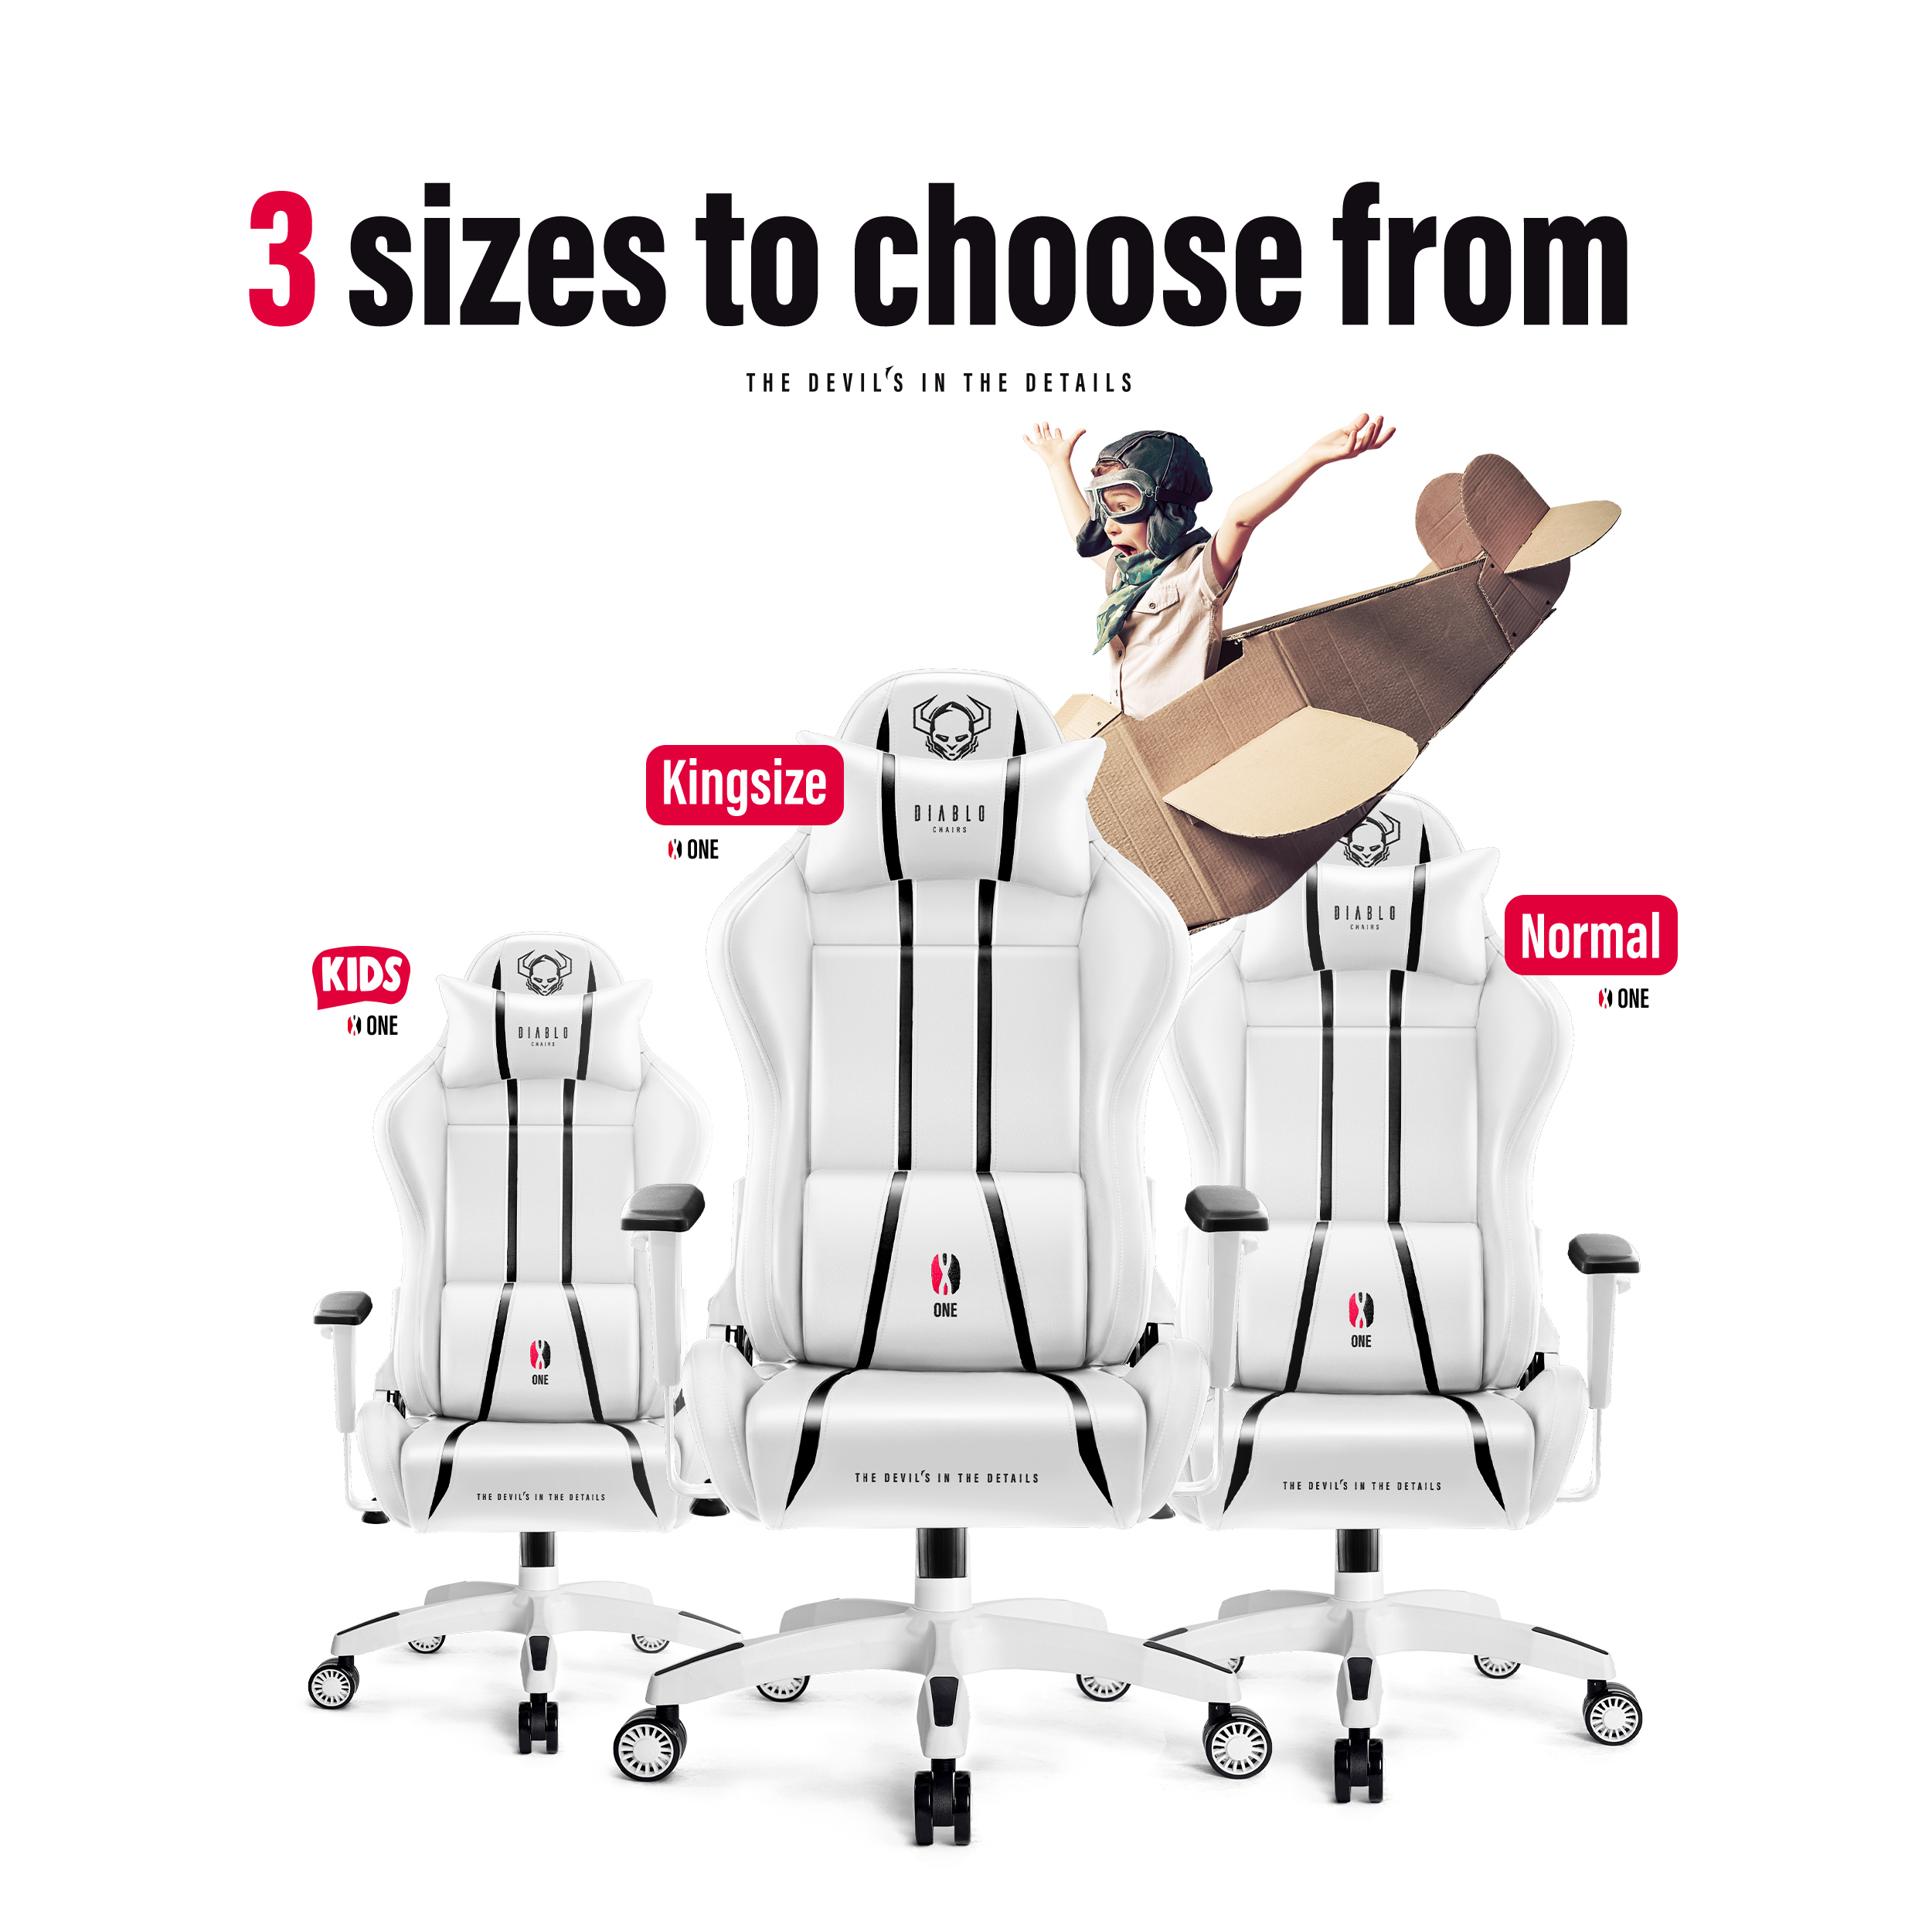 X-ONE Chair, DIABLO white STUHL CHAIRS KING GAMING 2.0 Gaming